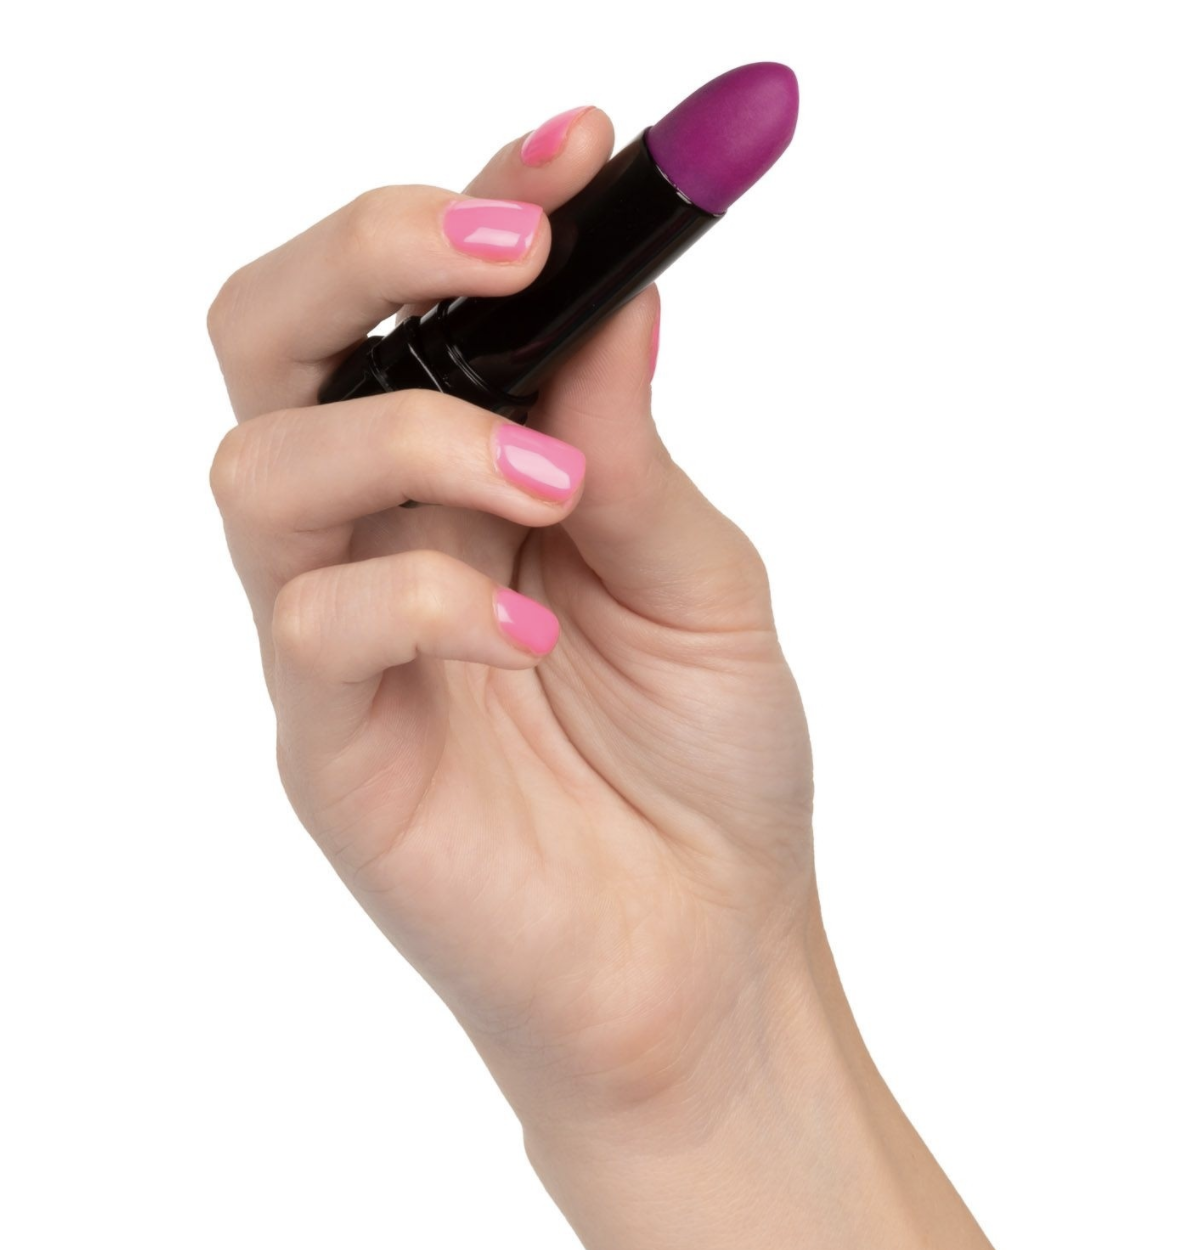 Hand holds purple and black lipstick-shaped vibrator